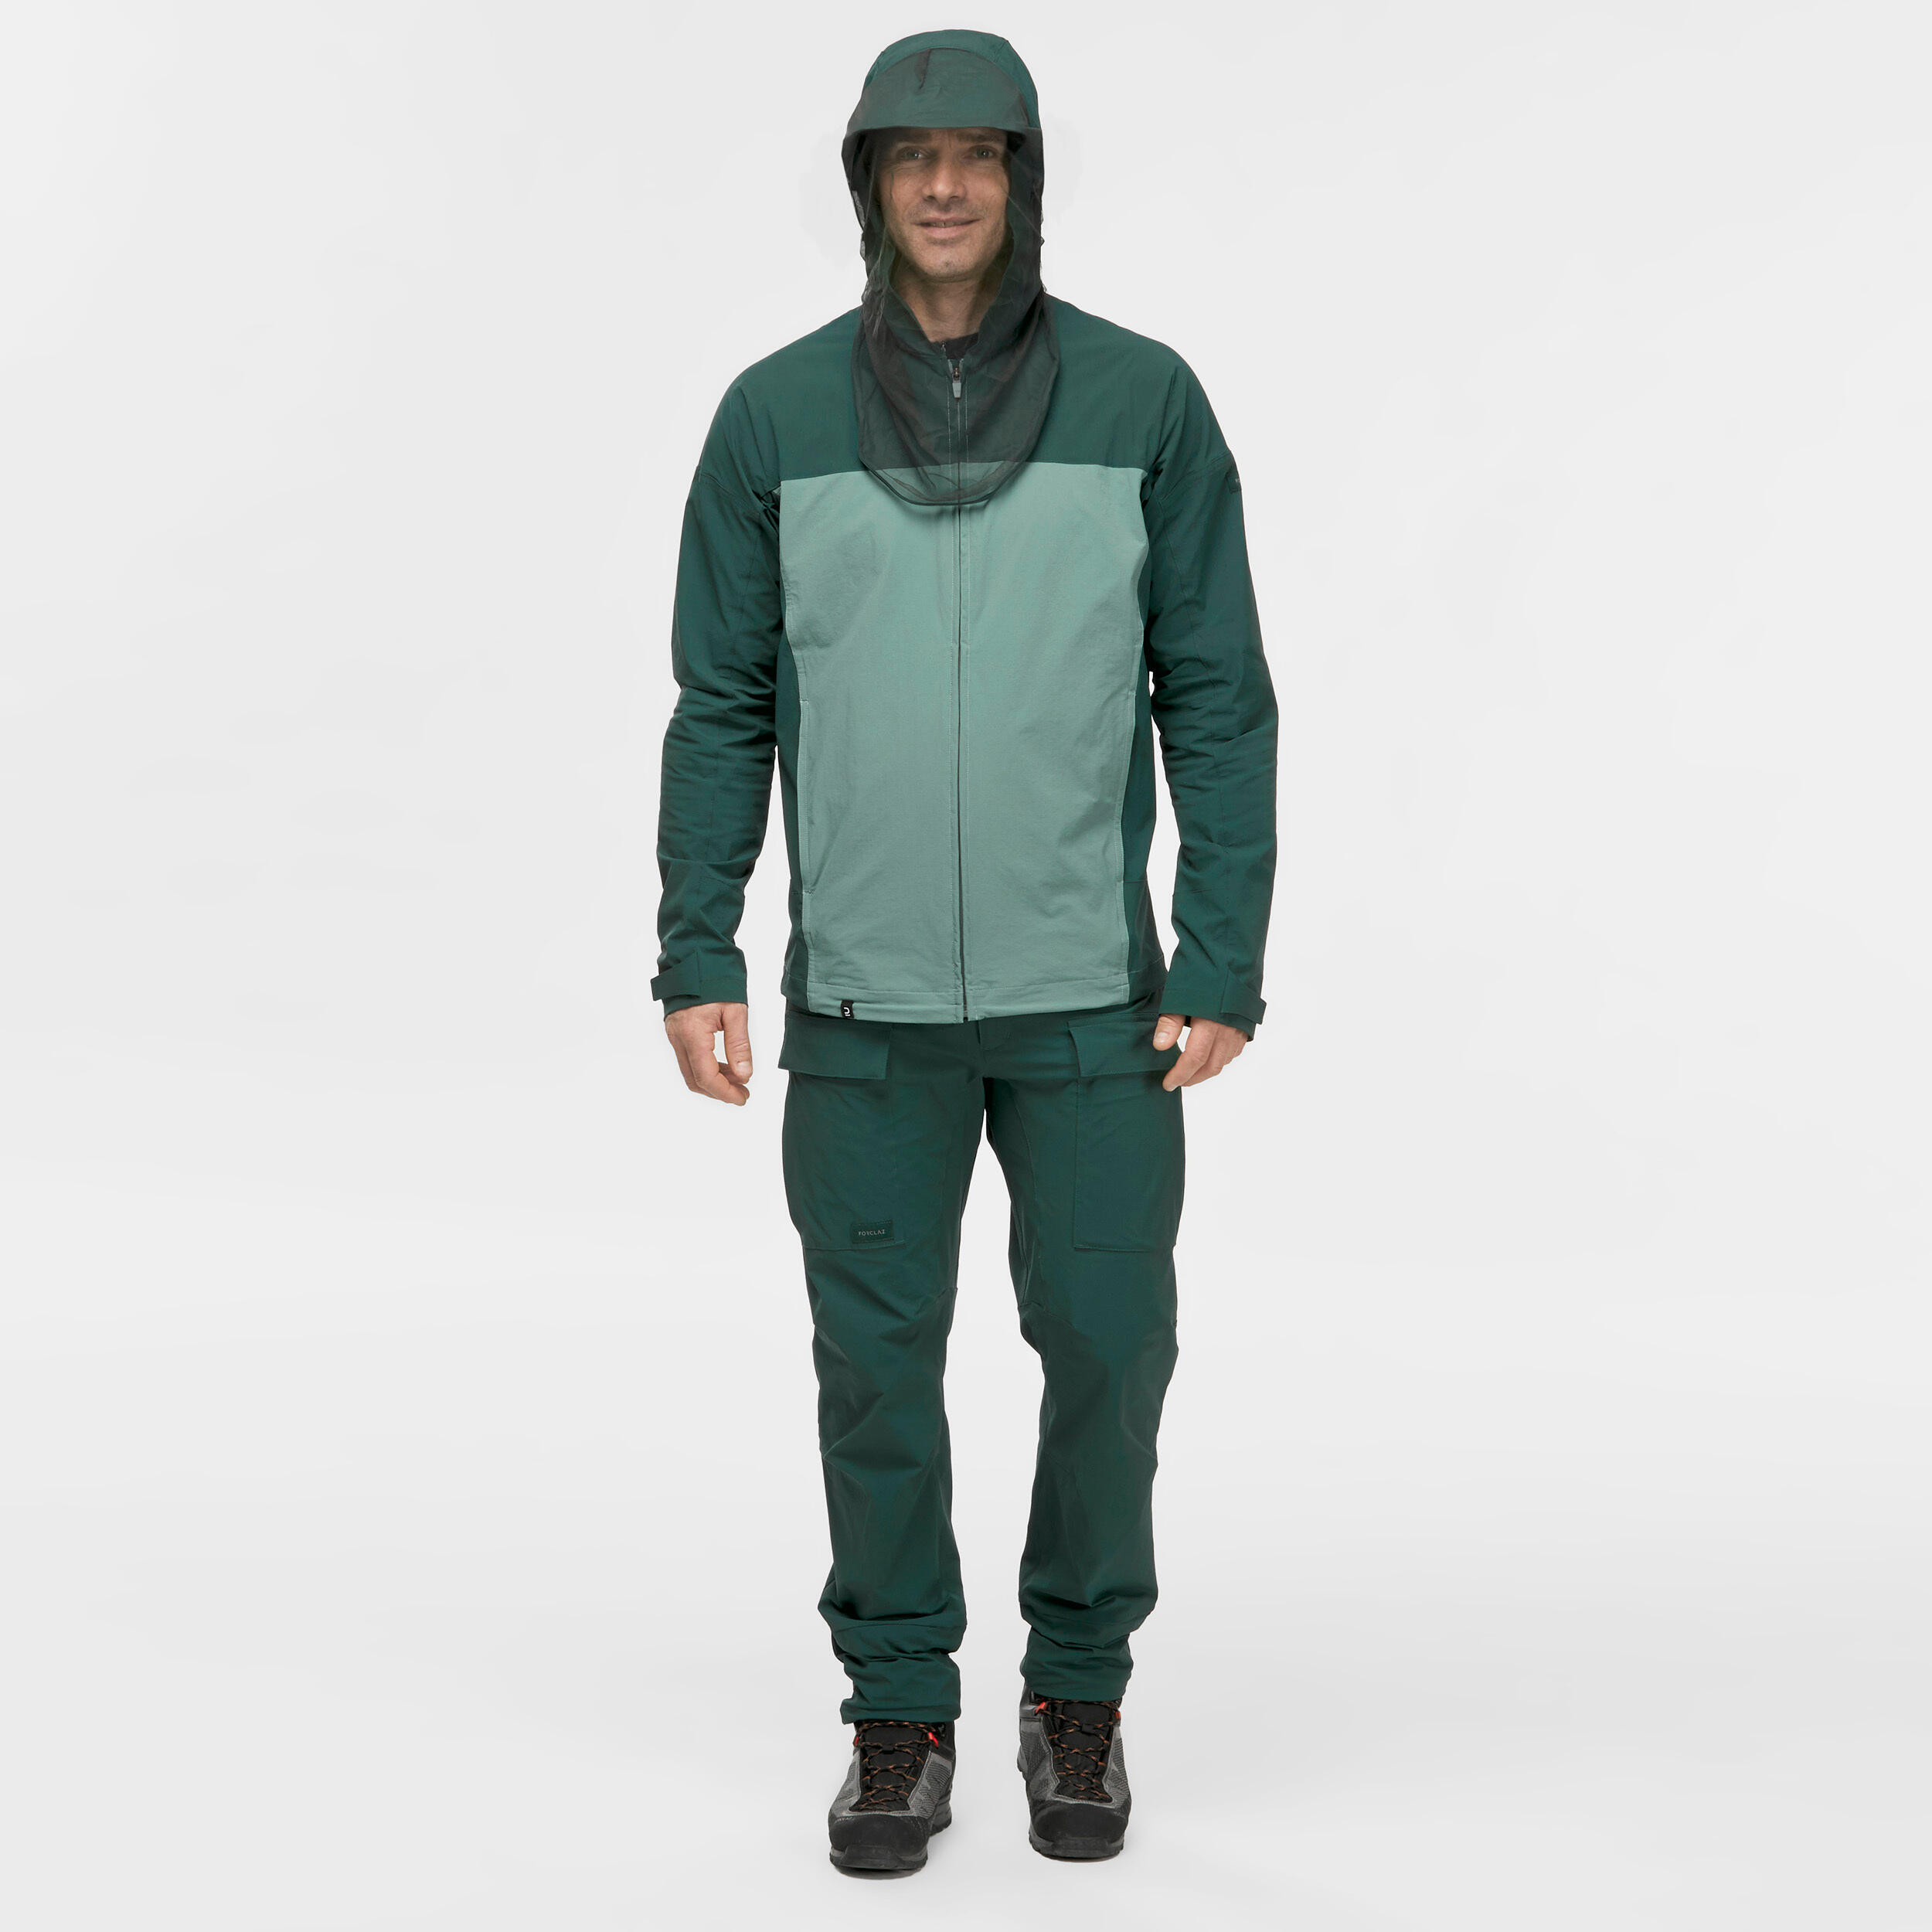 Unisex anti-mosquito jacket - Tropic 900 - Green 15/17